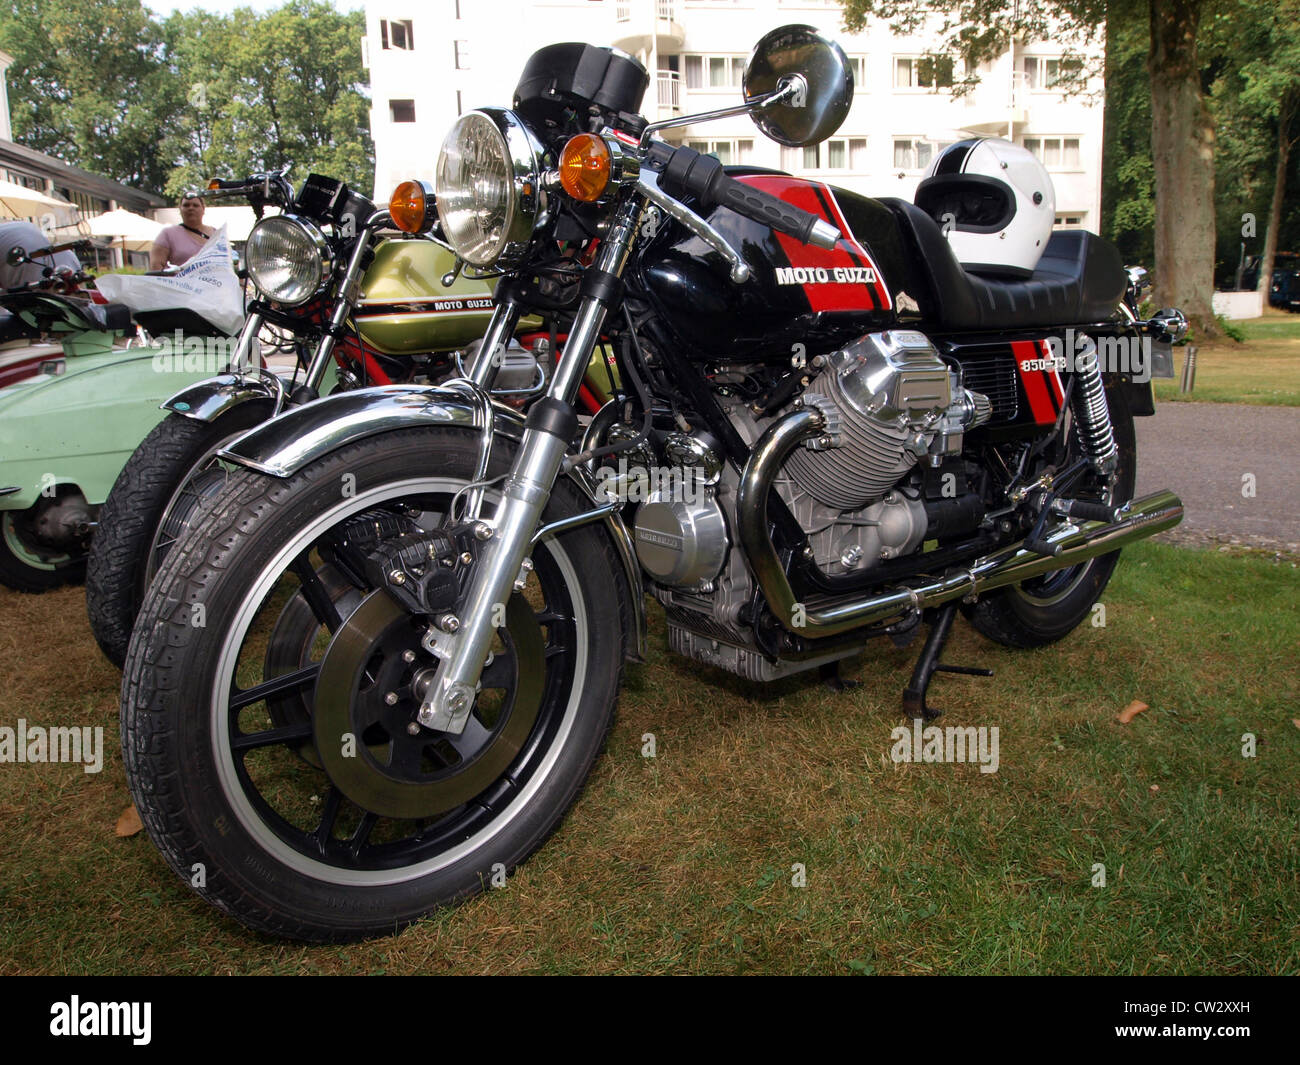 Moto Guzzi 850 T3 Foto stock - Alamy